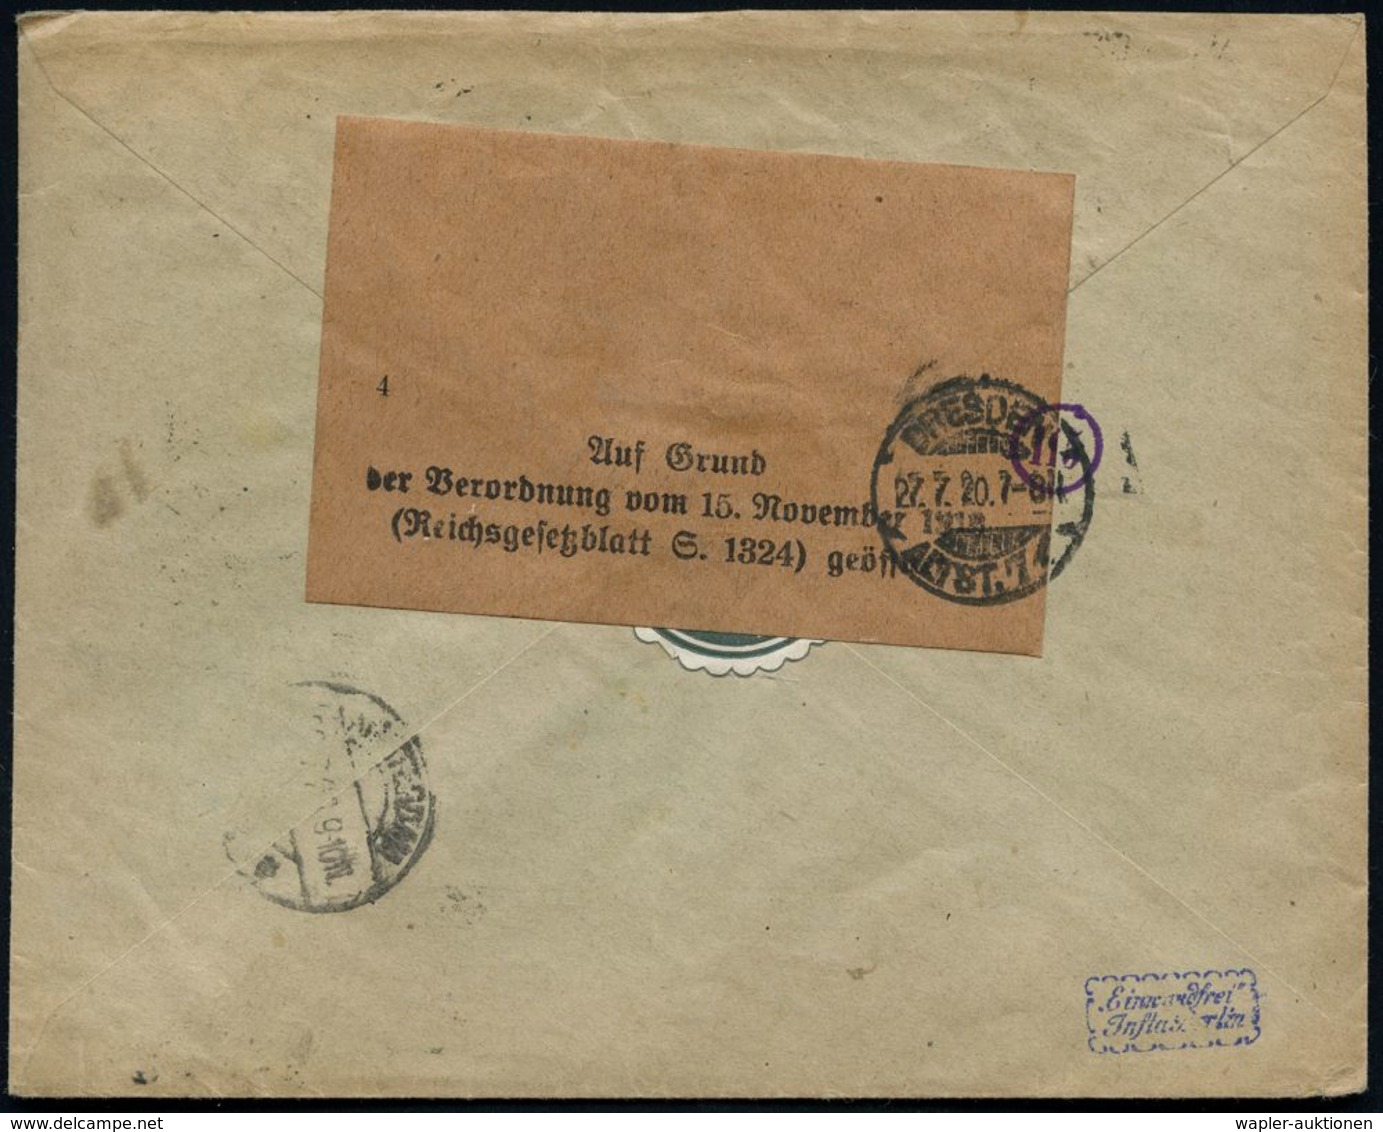 DRESDEN 1 1920 (26.7.) Germania 2x 5 Pf. U. 1,50 M. Postmuseum, Alle Mit Firmenlochung "Dr. B." = Dr (esdner) B(ank) + R - Zonder Classificatie